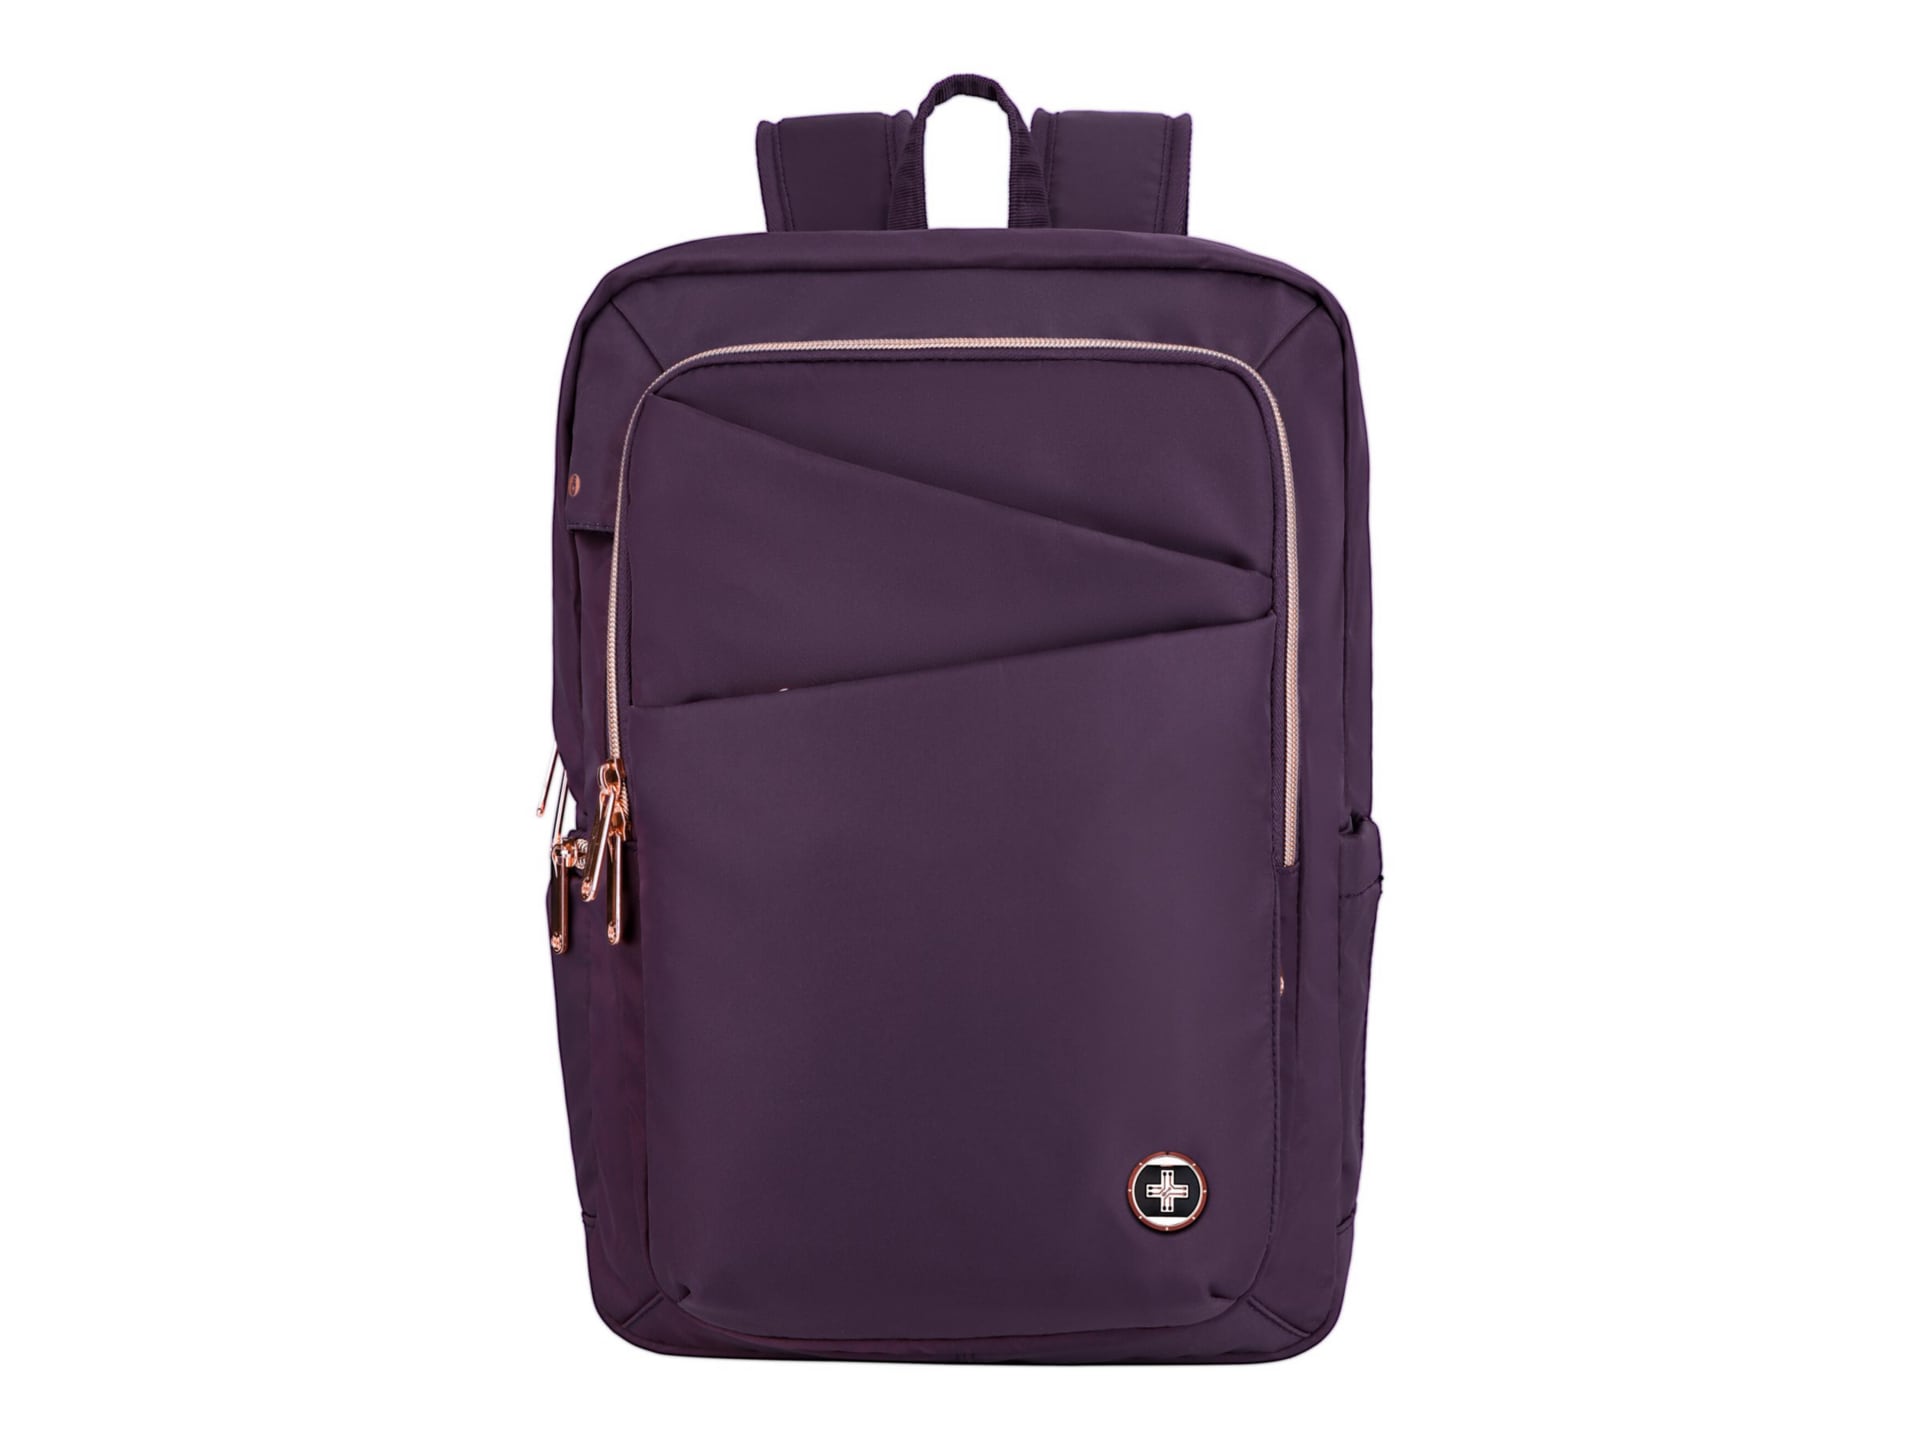 Swissdigital KATY ROSE SD1006F-46 Carrying Case Backpack for 15.6" Laptop - Purple